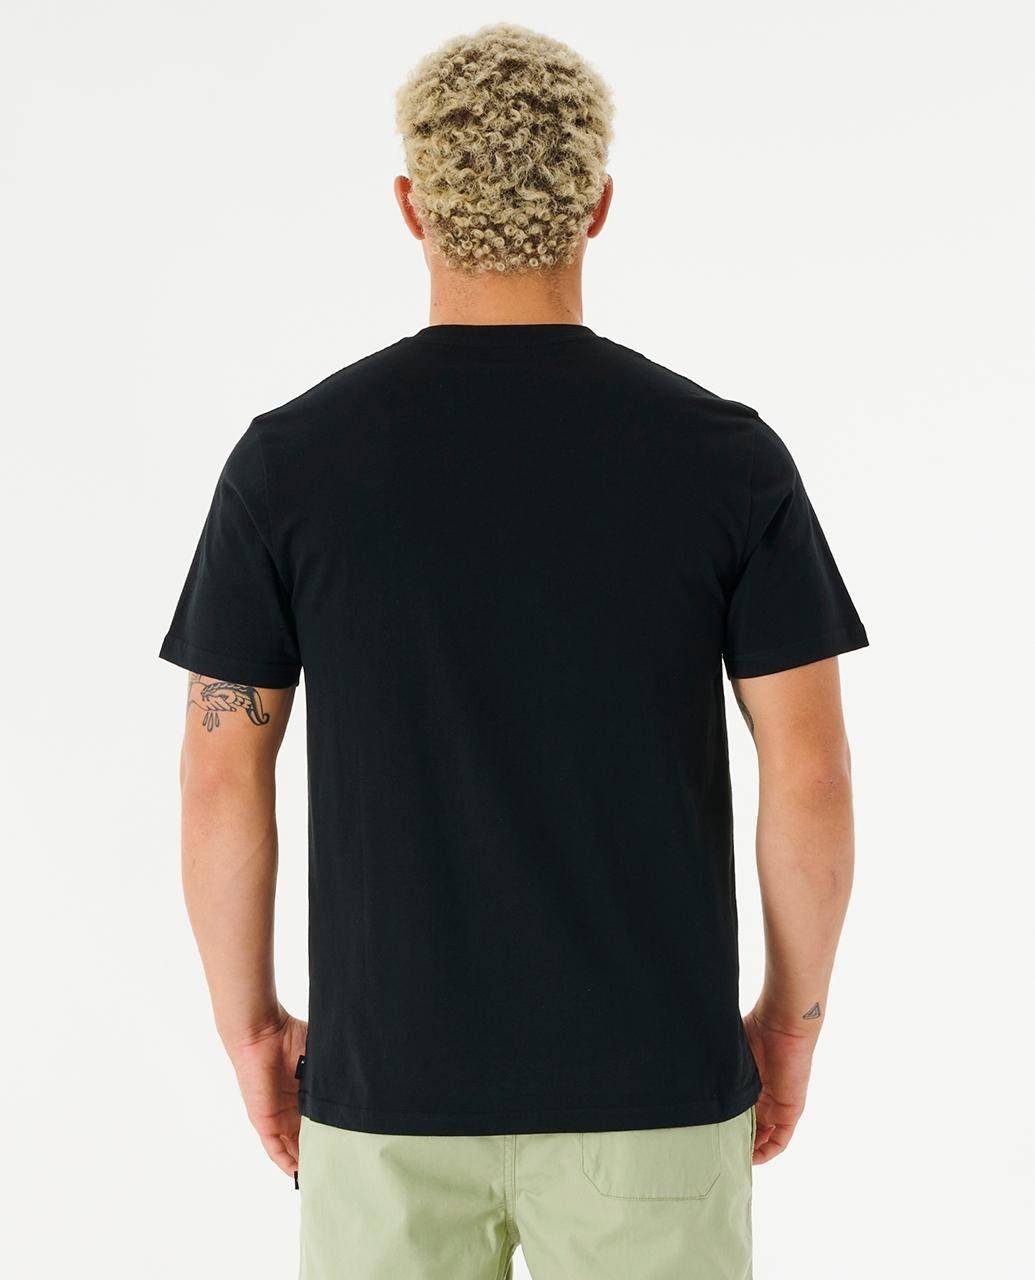 Rip Curl Print-Shirt Surf Waving T-Shirt Revival